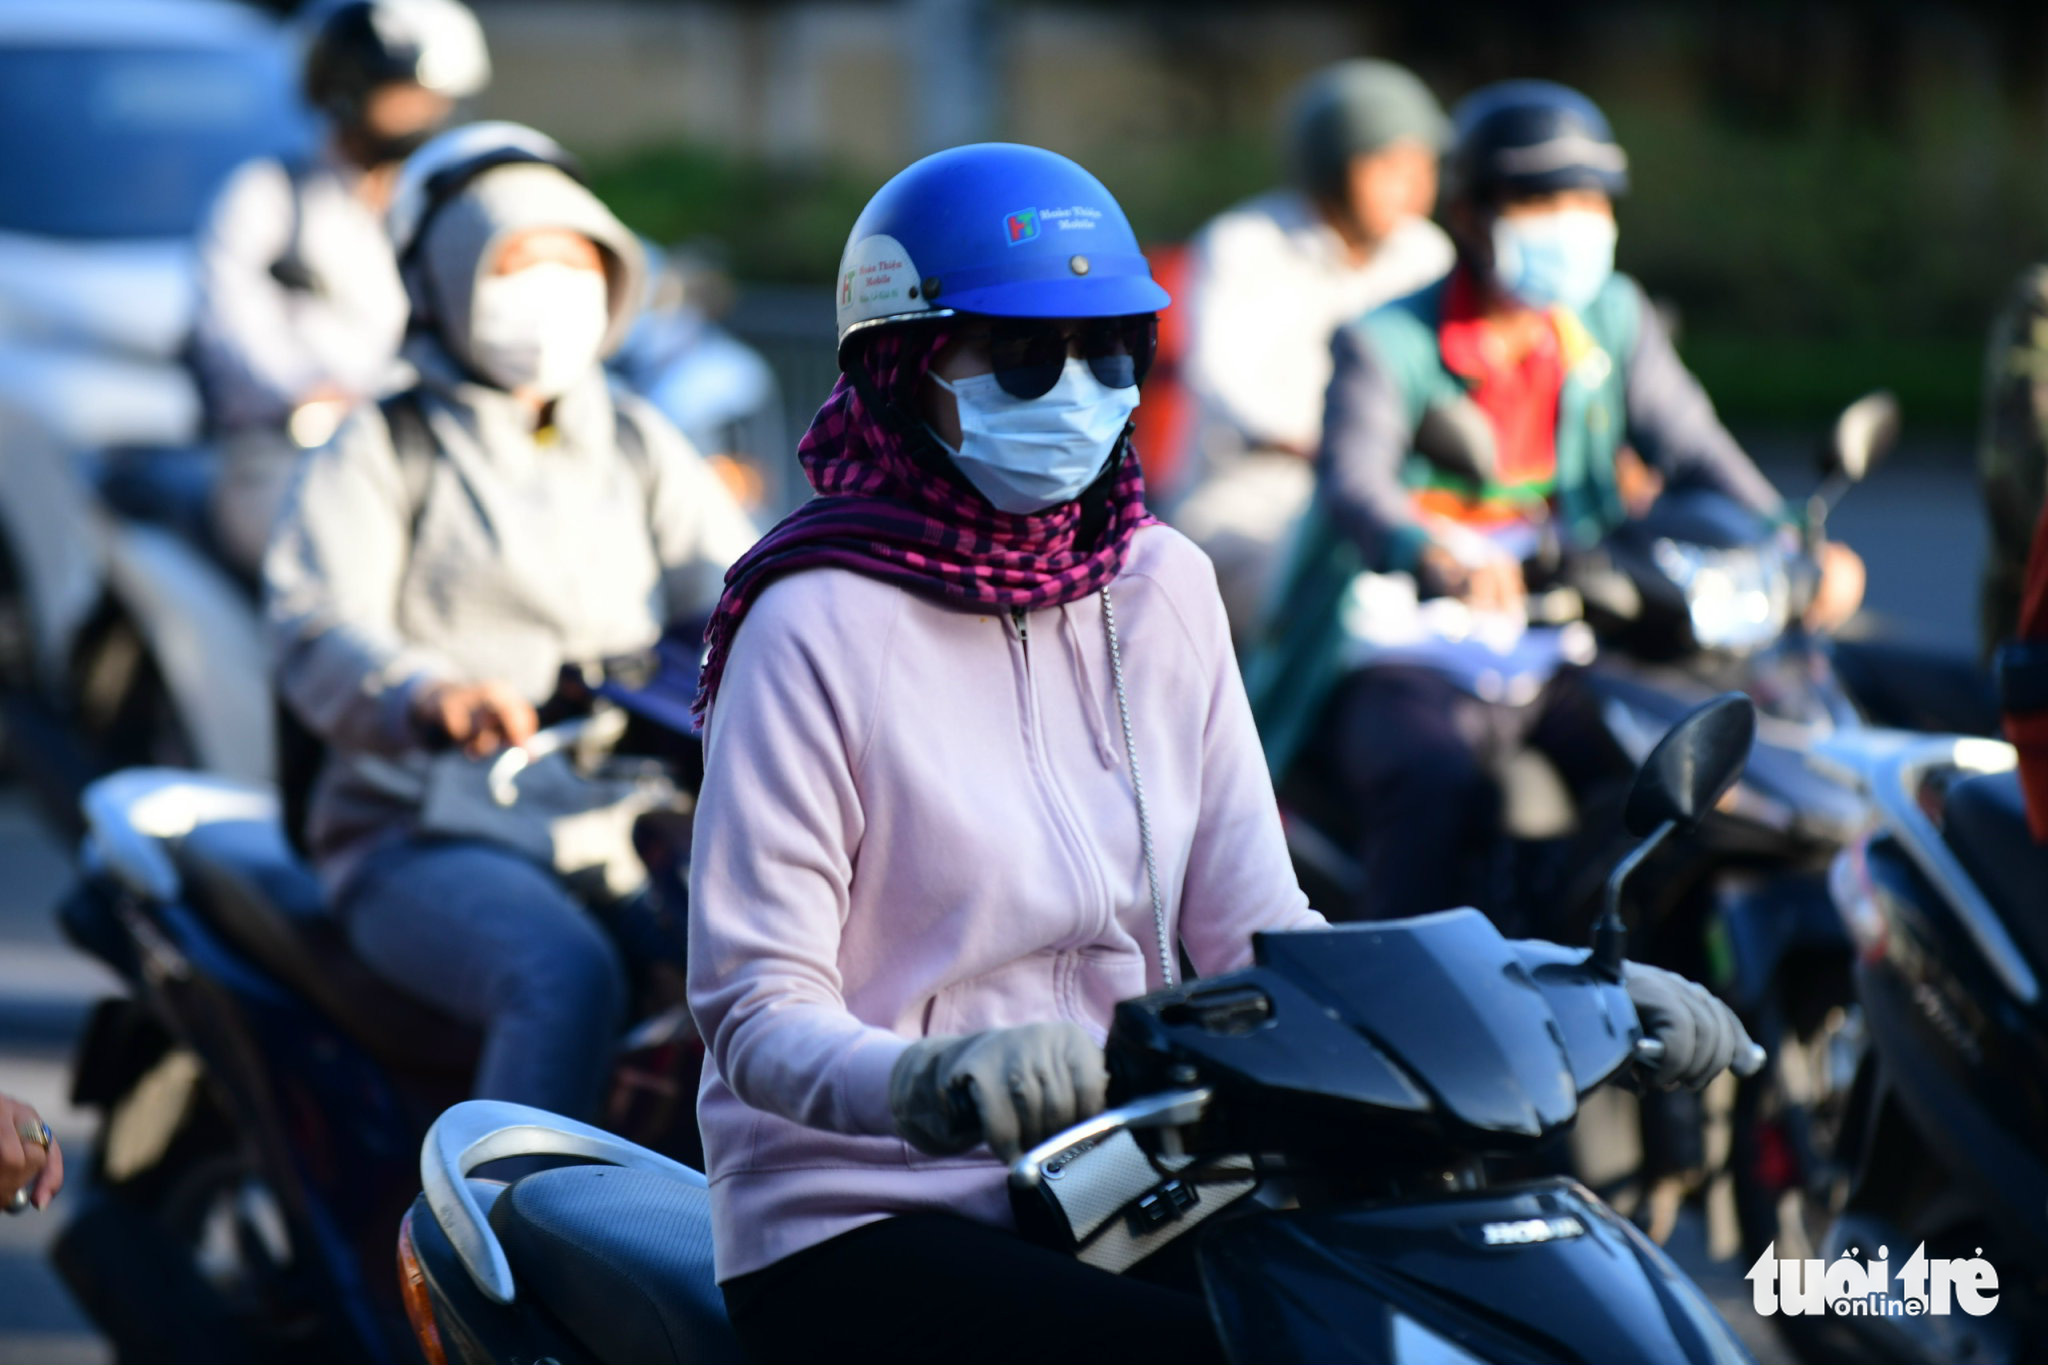 Temperatures drop below 20 degrees Celsius in southern Vietnam